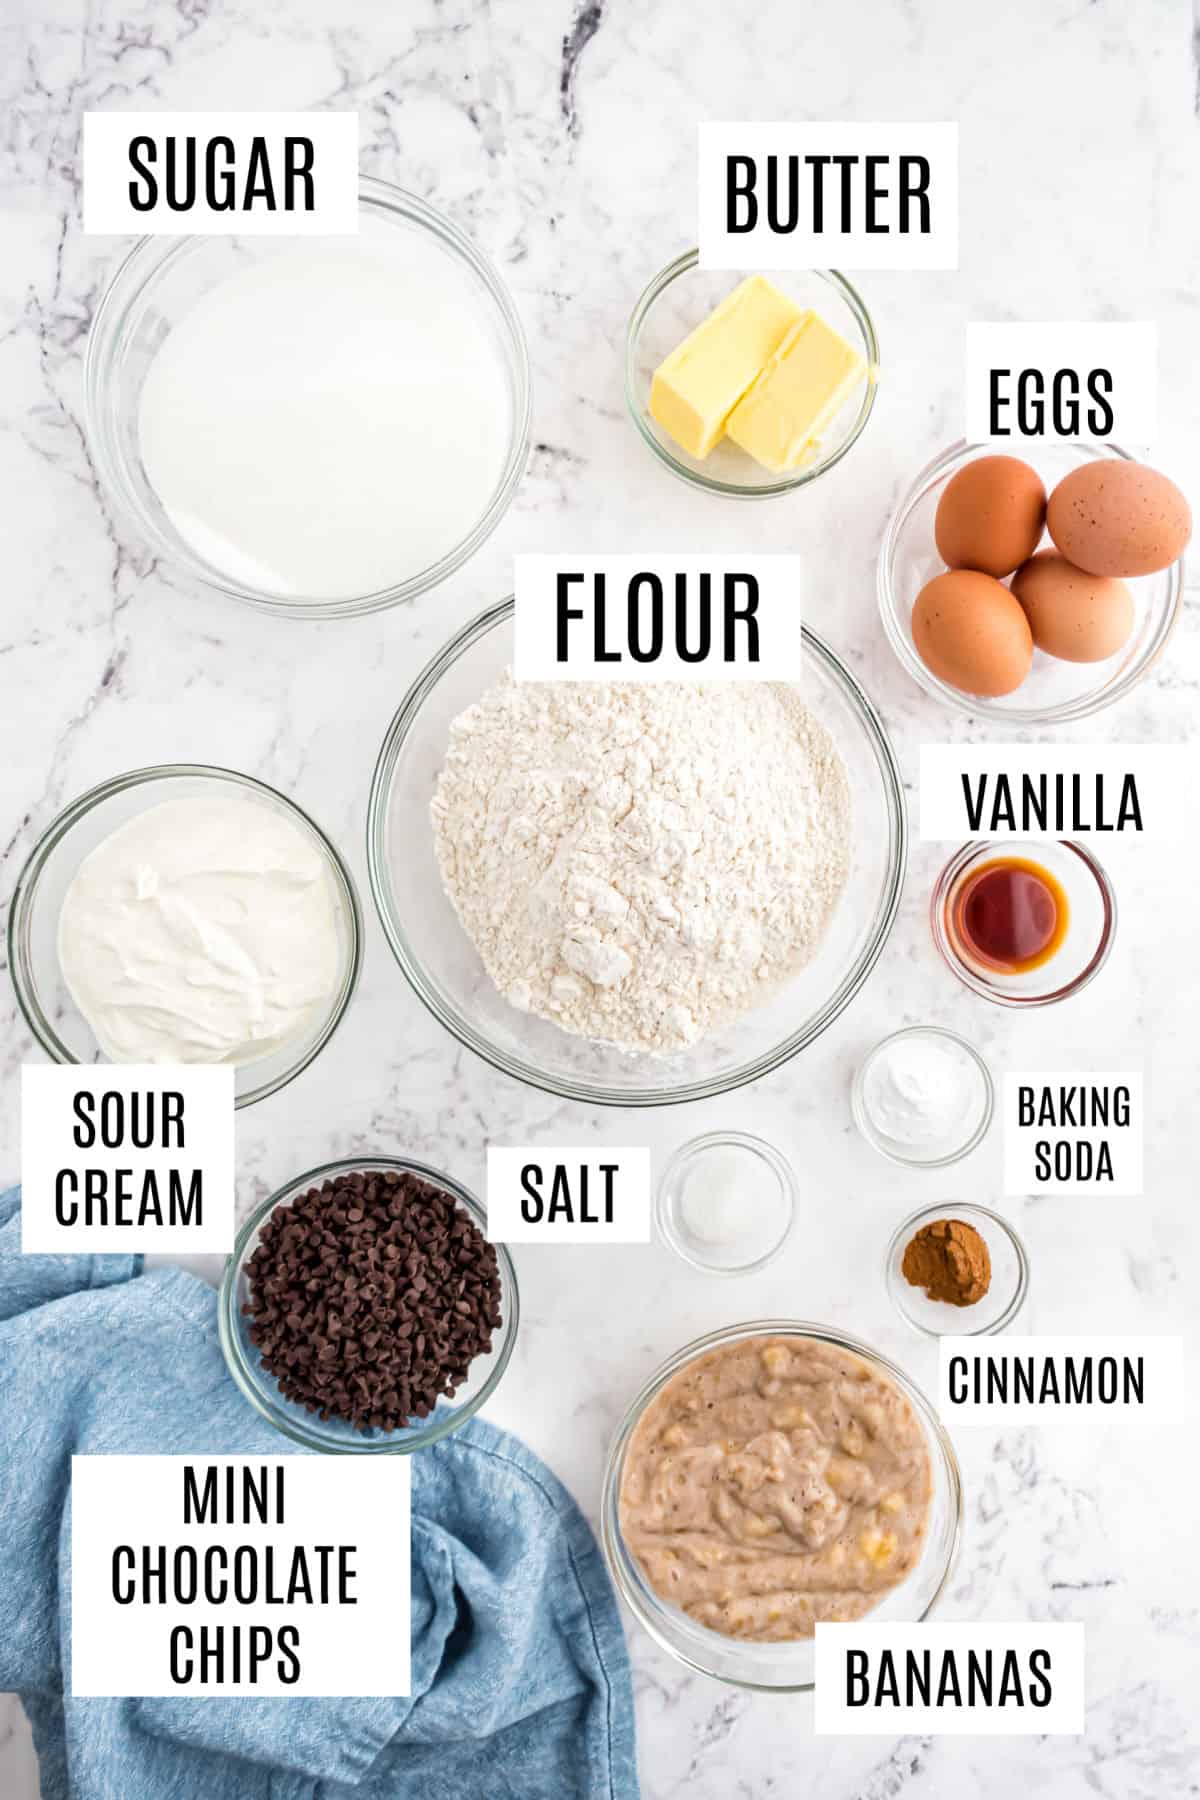 Ingredients needed to make chocolate chip banana muffins.